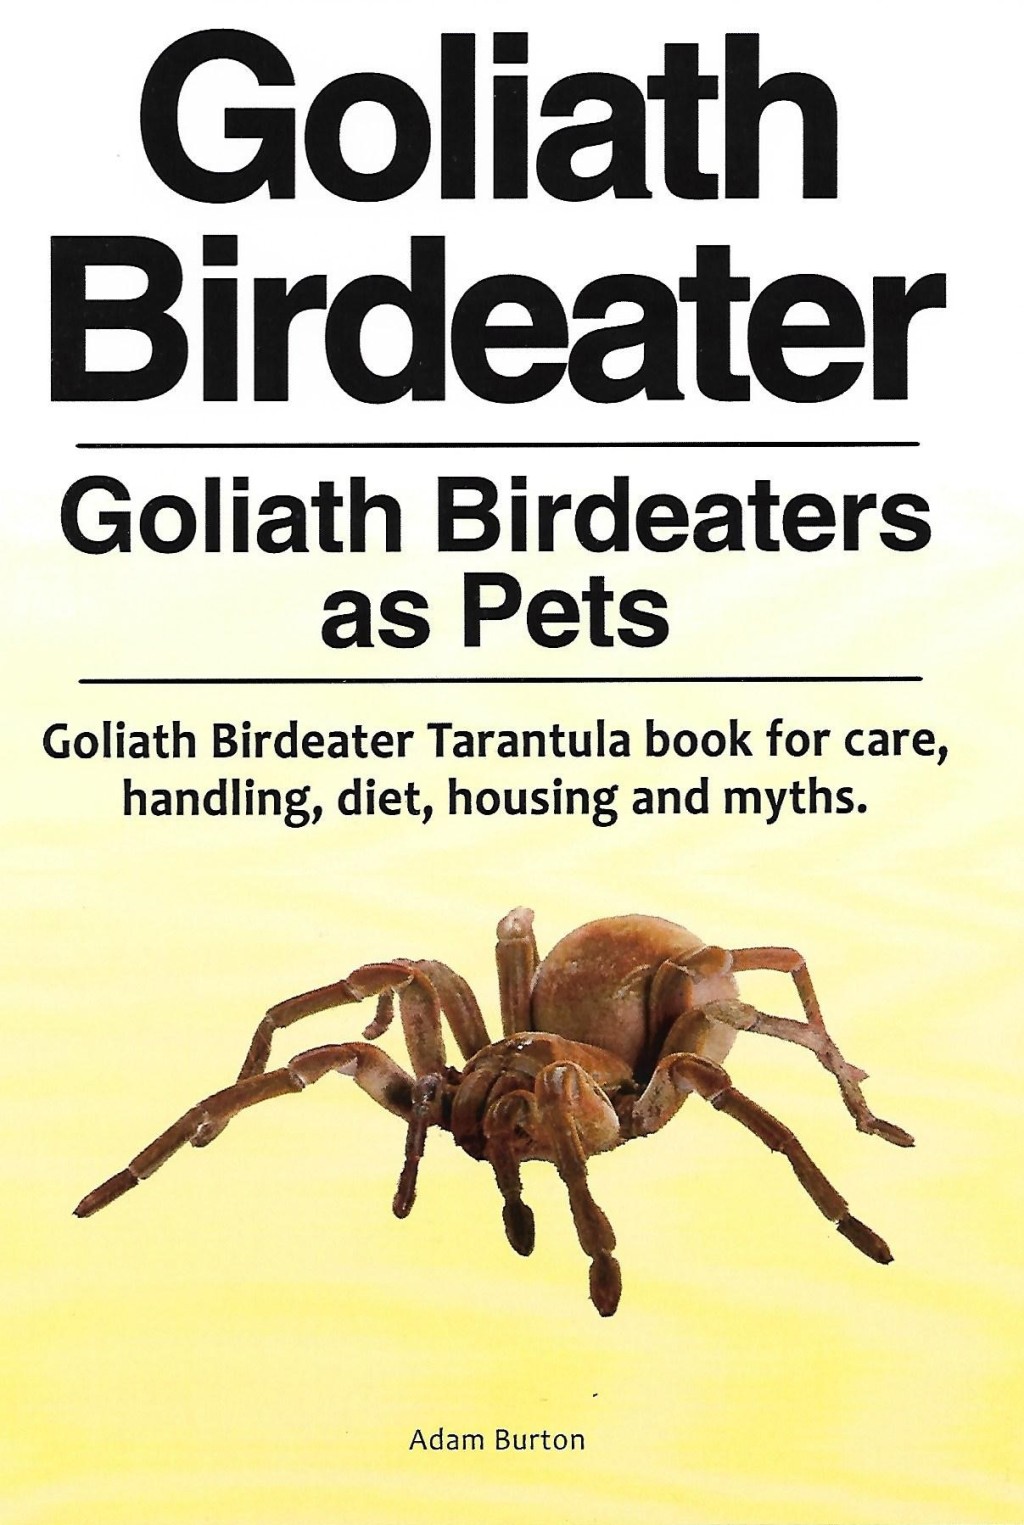 BOOK REVIEW: “Goliath Birdeater: Goliath Birdeaters As Pets” by Adam Burton